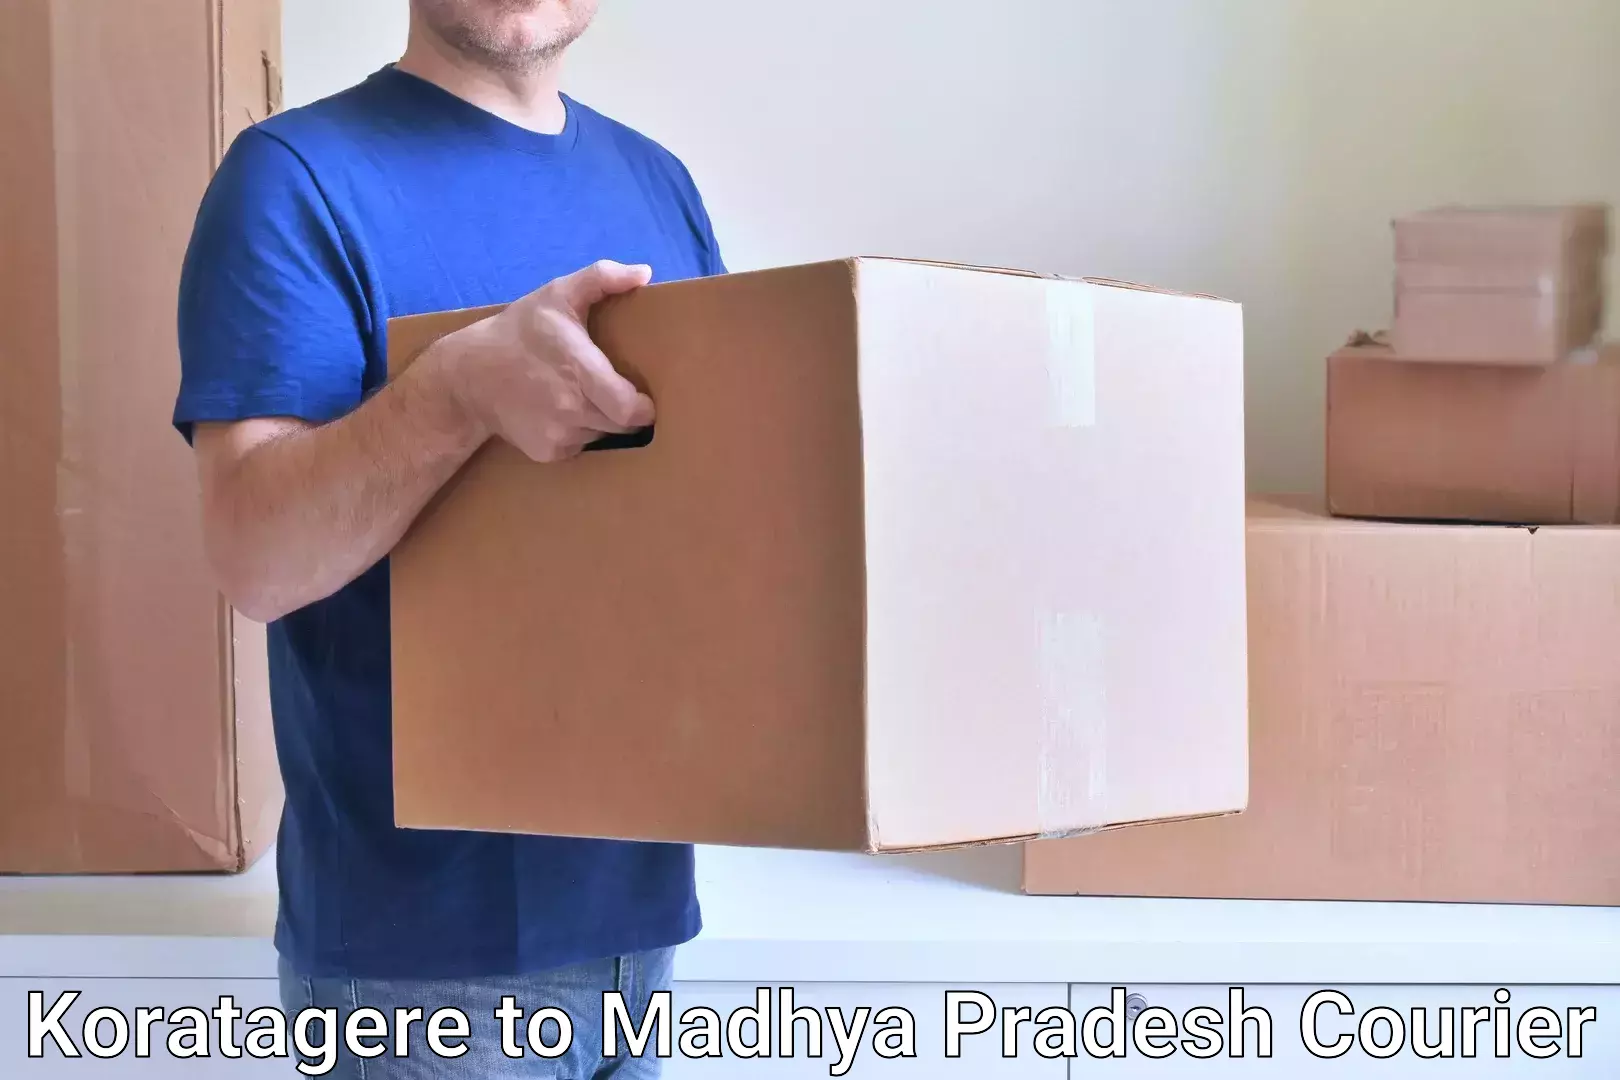 Full-service courier options Koratagere to Madhya Pradesh